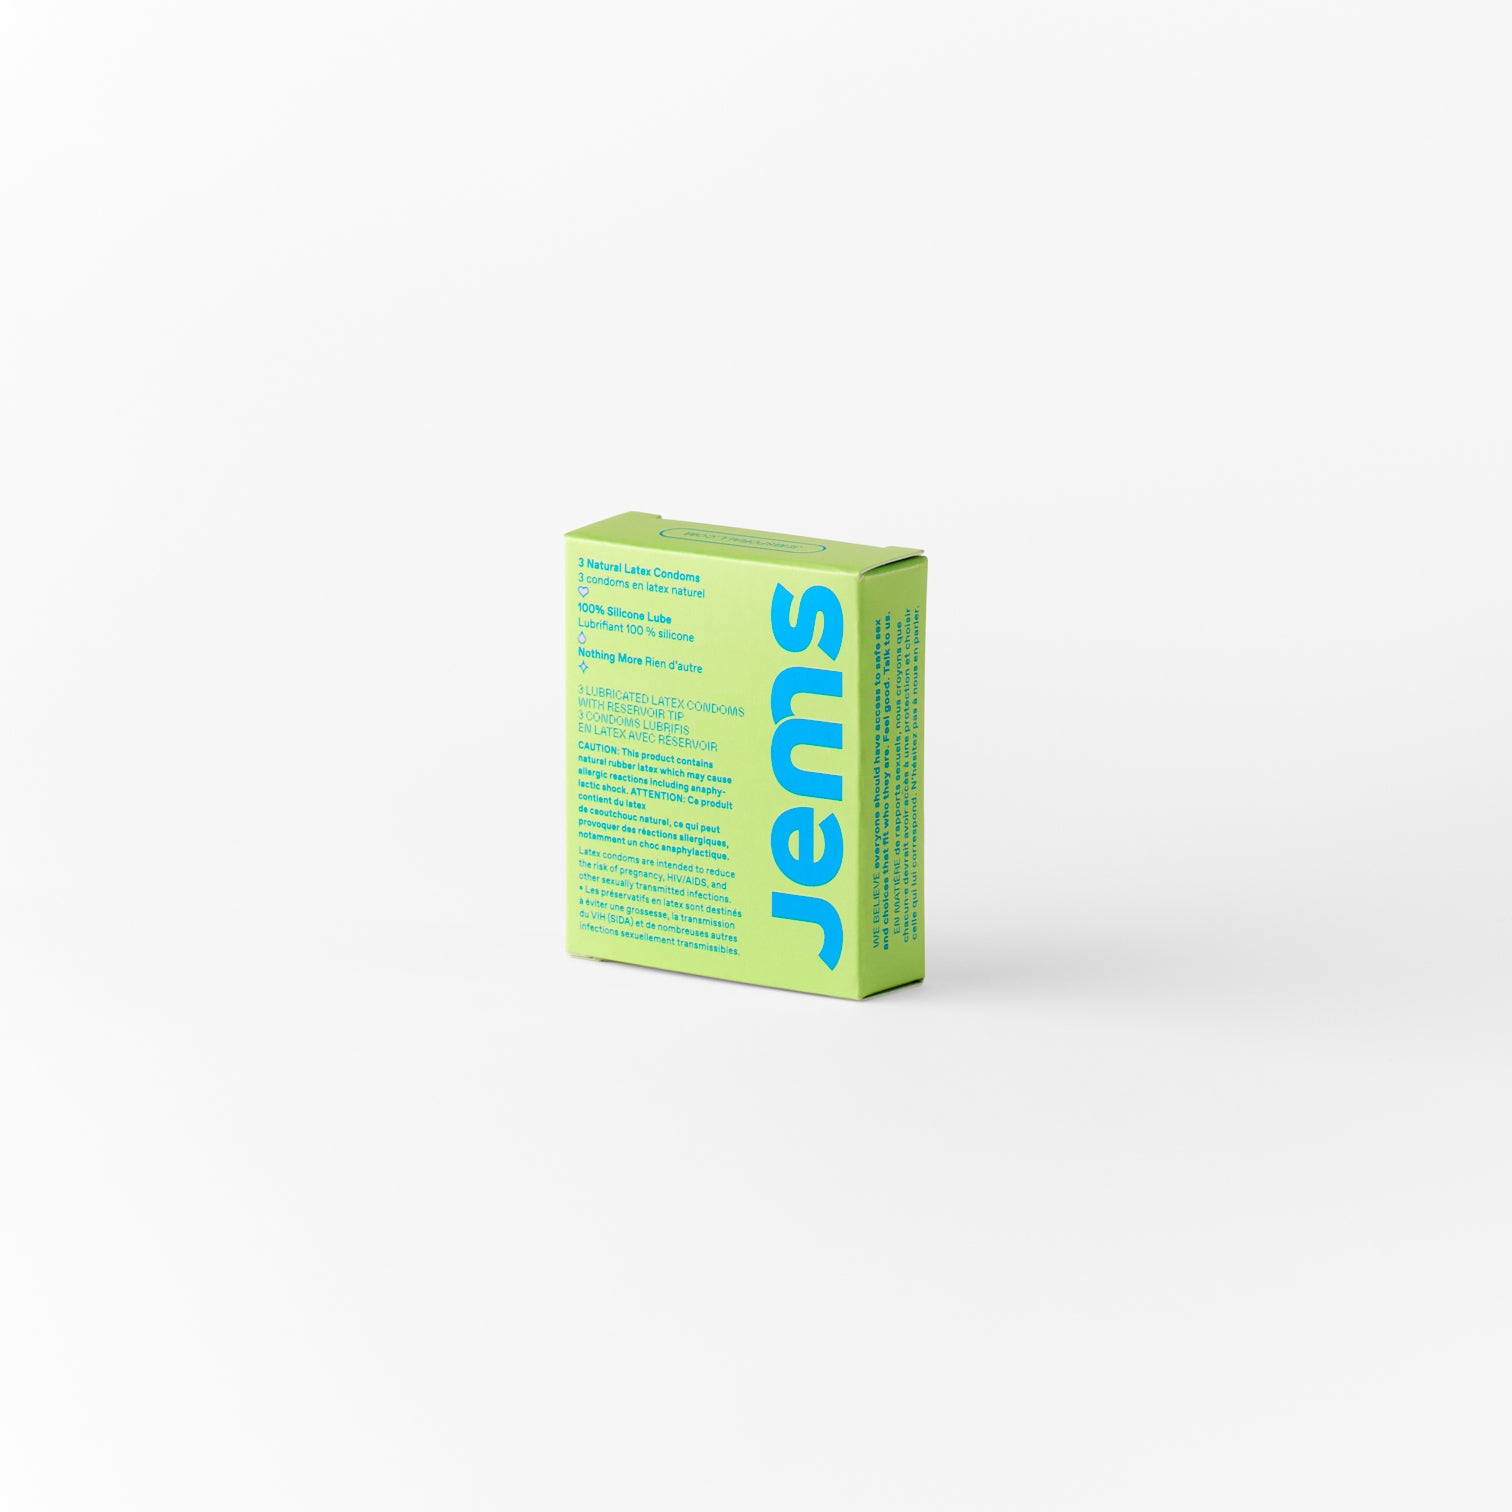 3 pack of Jems natural rubber latex condoms